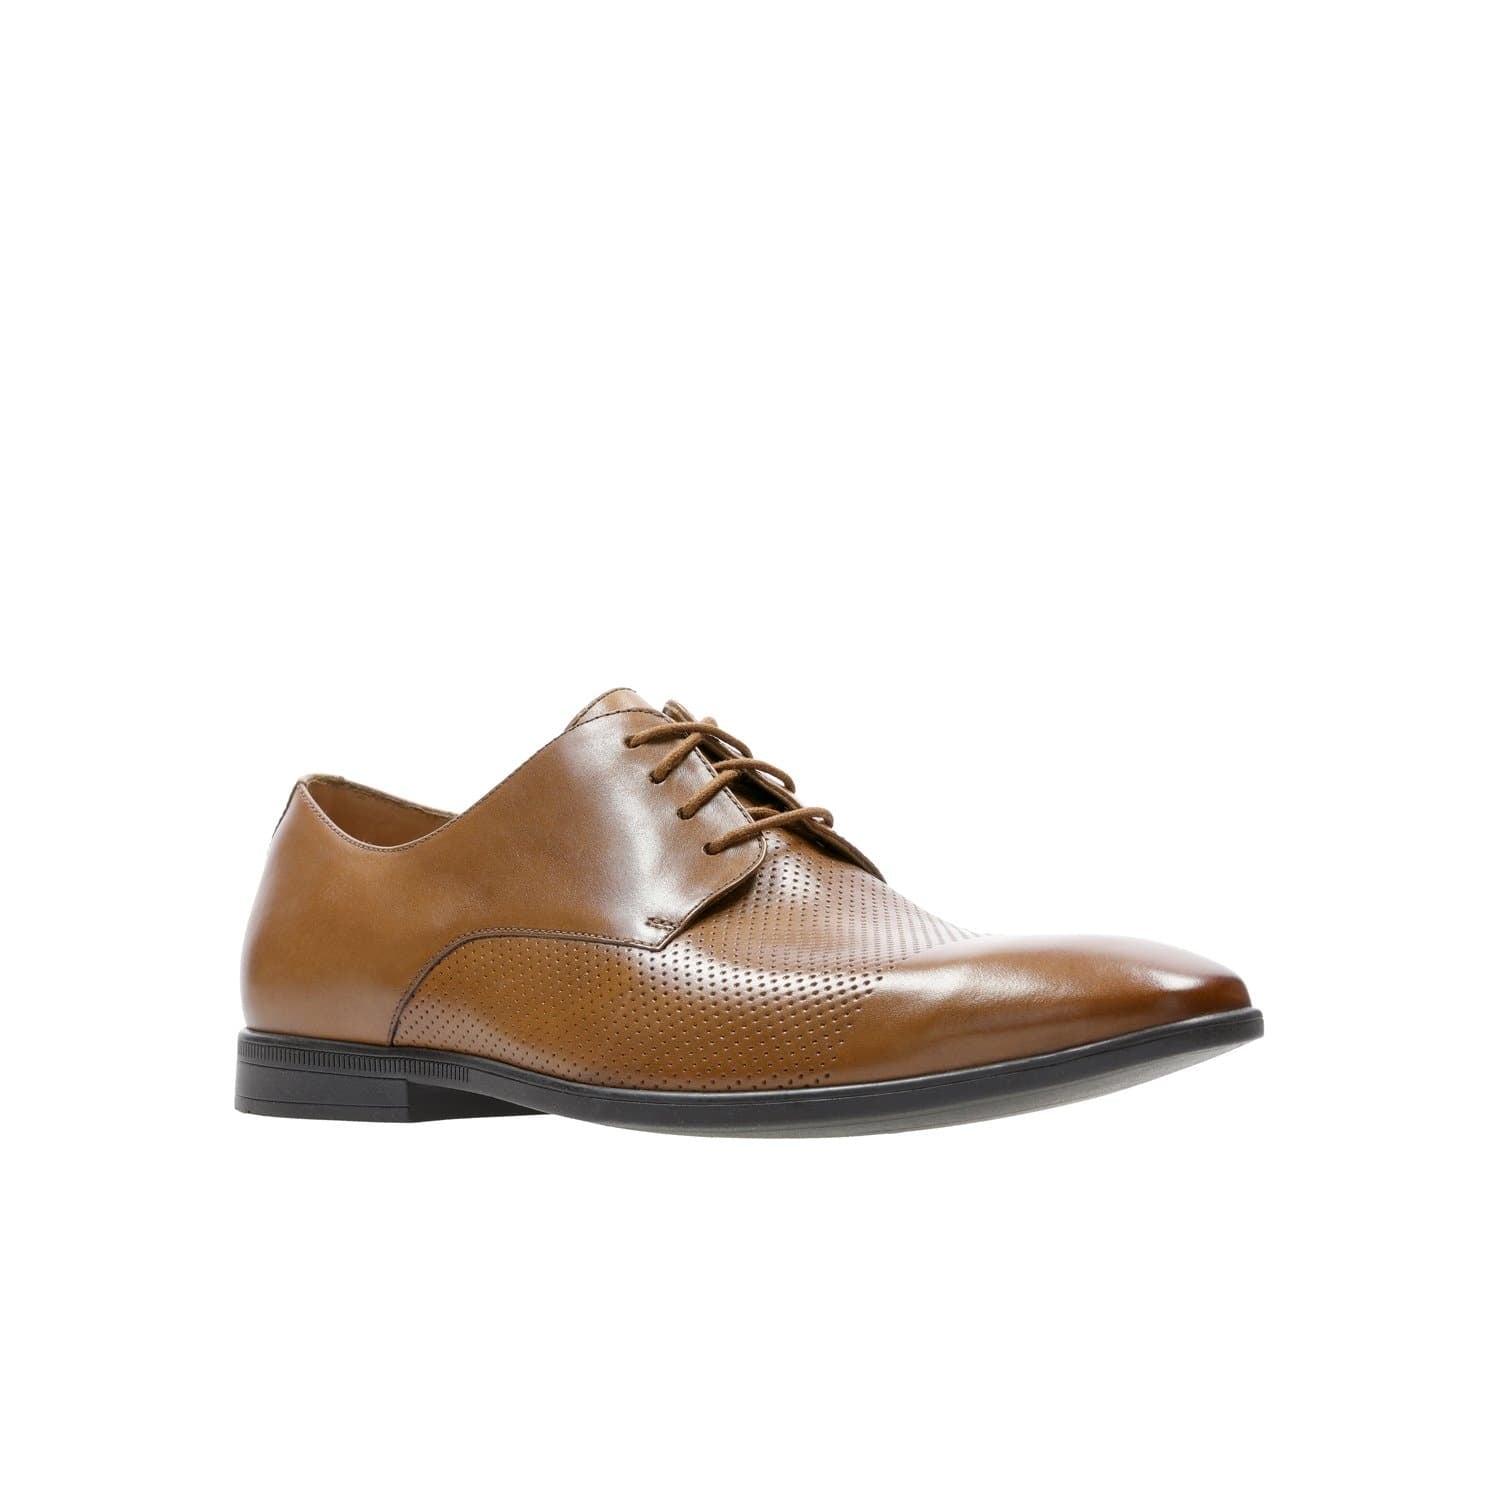 Clarks-Bampton-Cap-Men's-Shoes-Tan-Leather-26138981